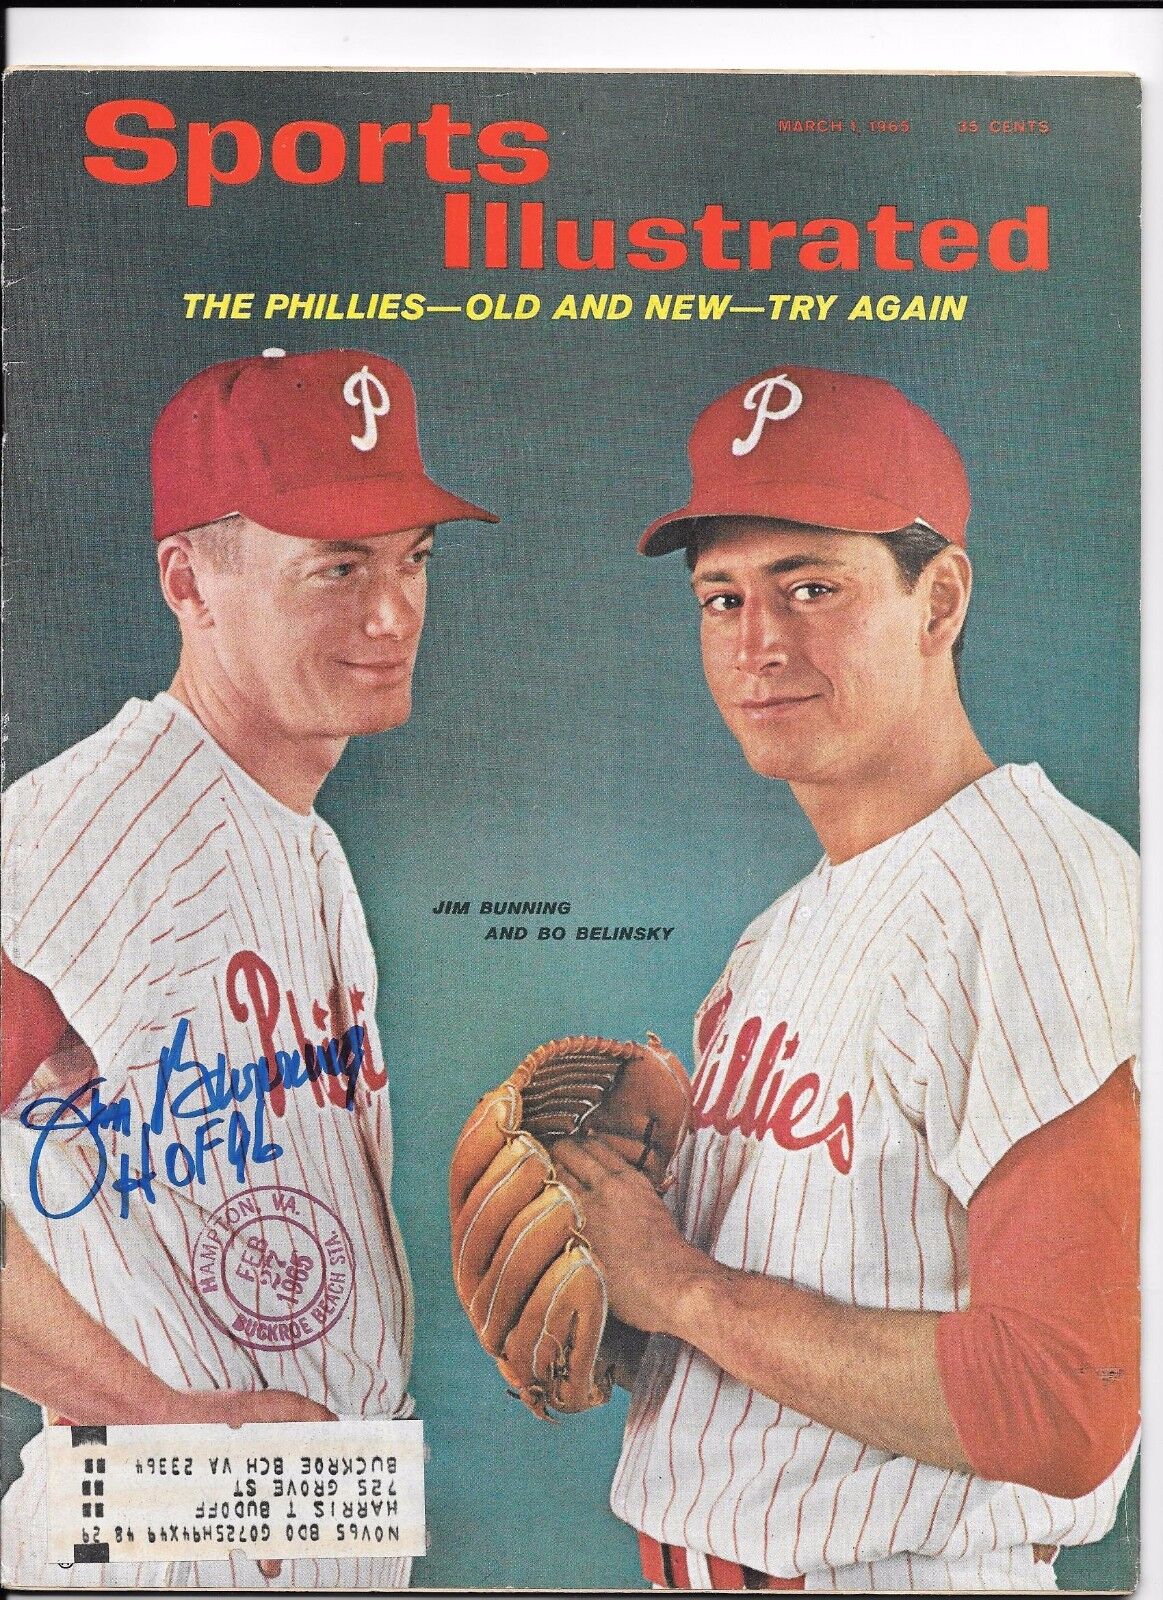 Jim Bunning Autograph / Signed Sport illustrated 3/1/65 Philadelphia Phillies